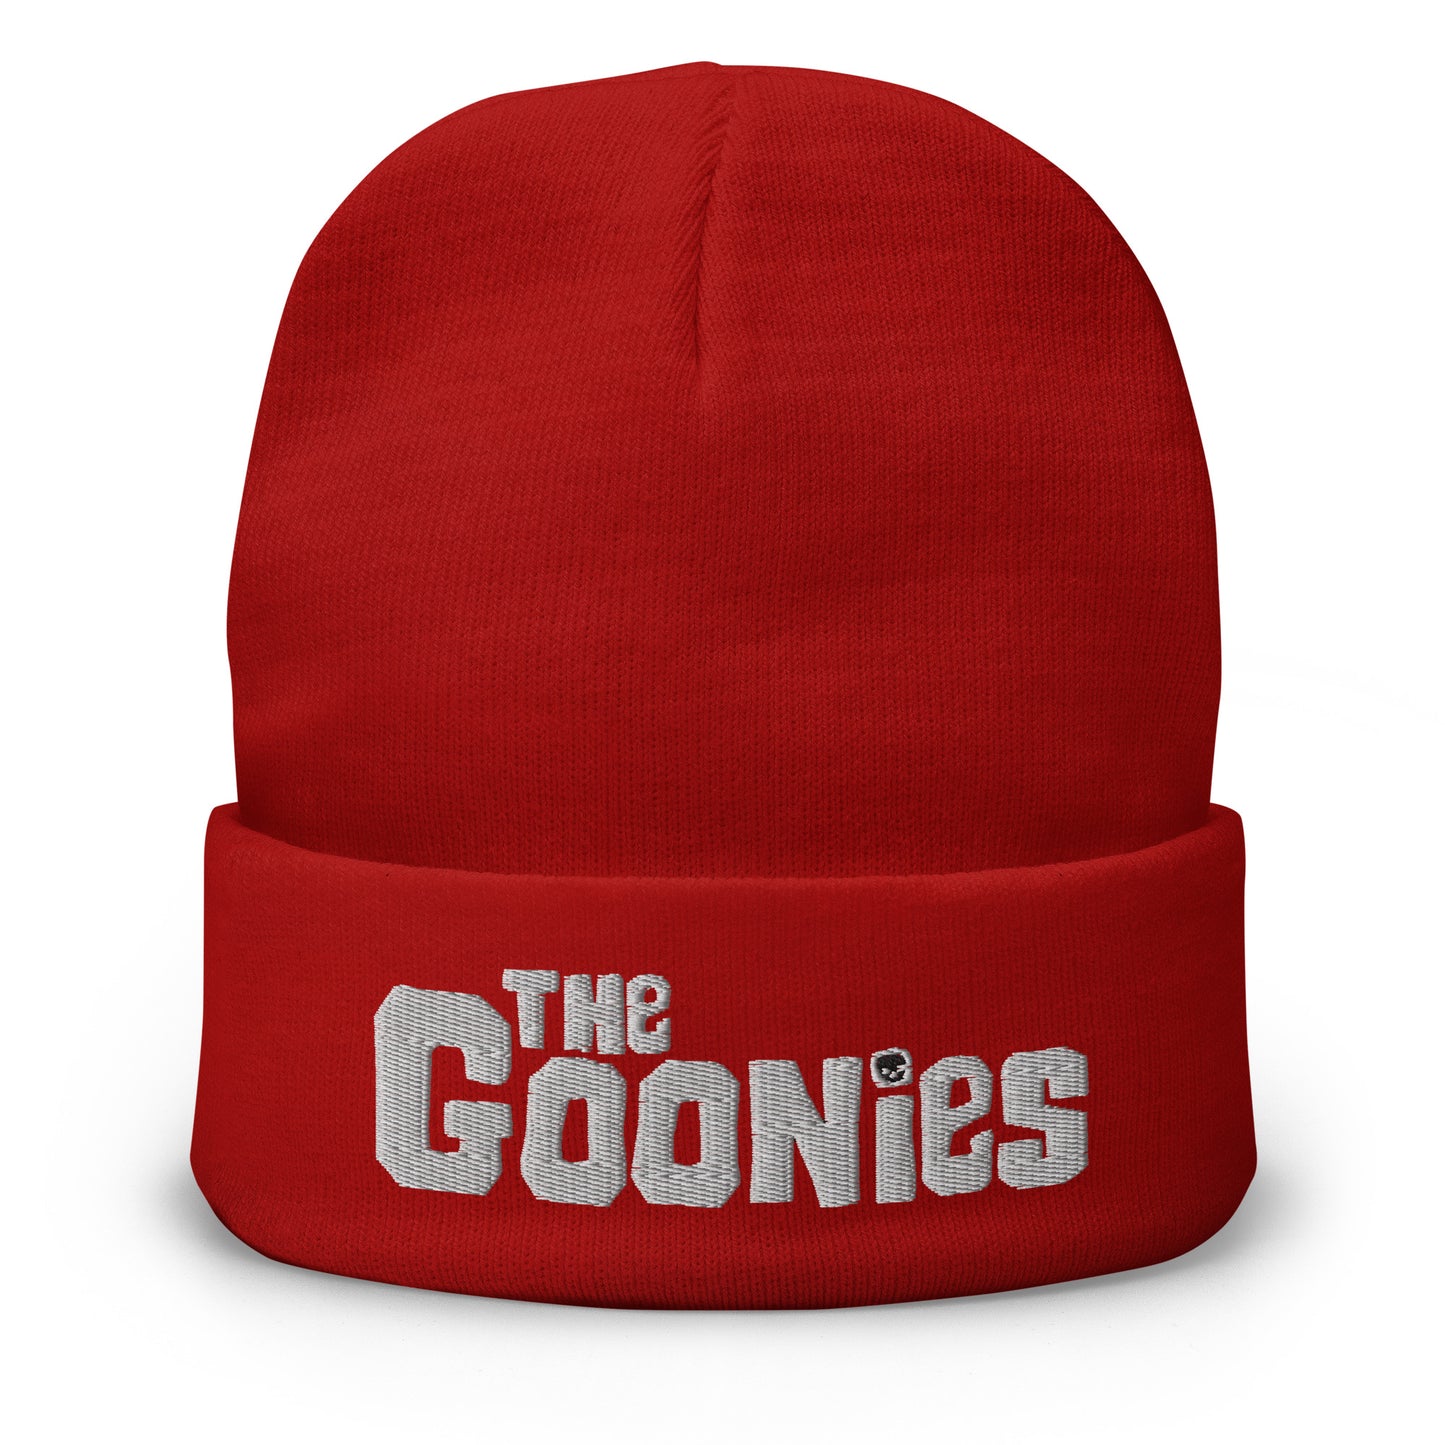 Goonies Embroidered Beanie, Goonies beanie, beanie goonies, Hat goonies, goonies hat, 80s movie Beanie, hey you guys, the goonies hat, 80s